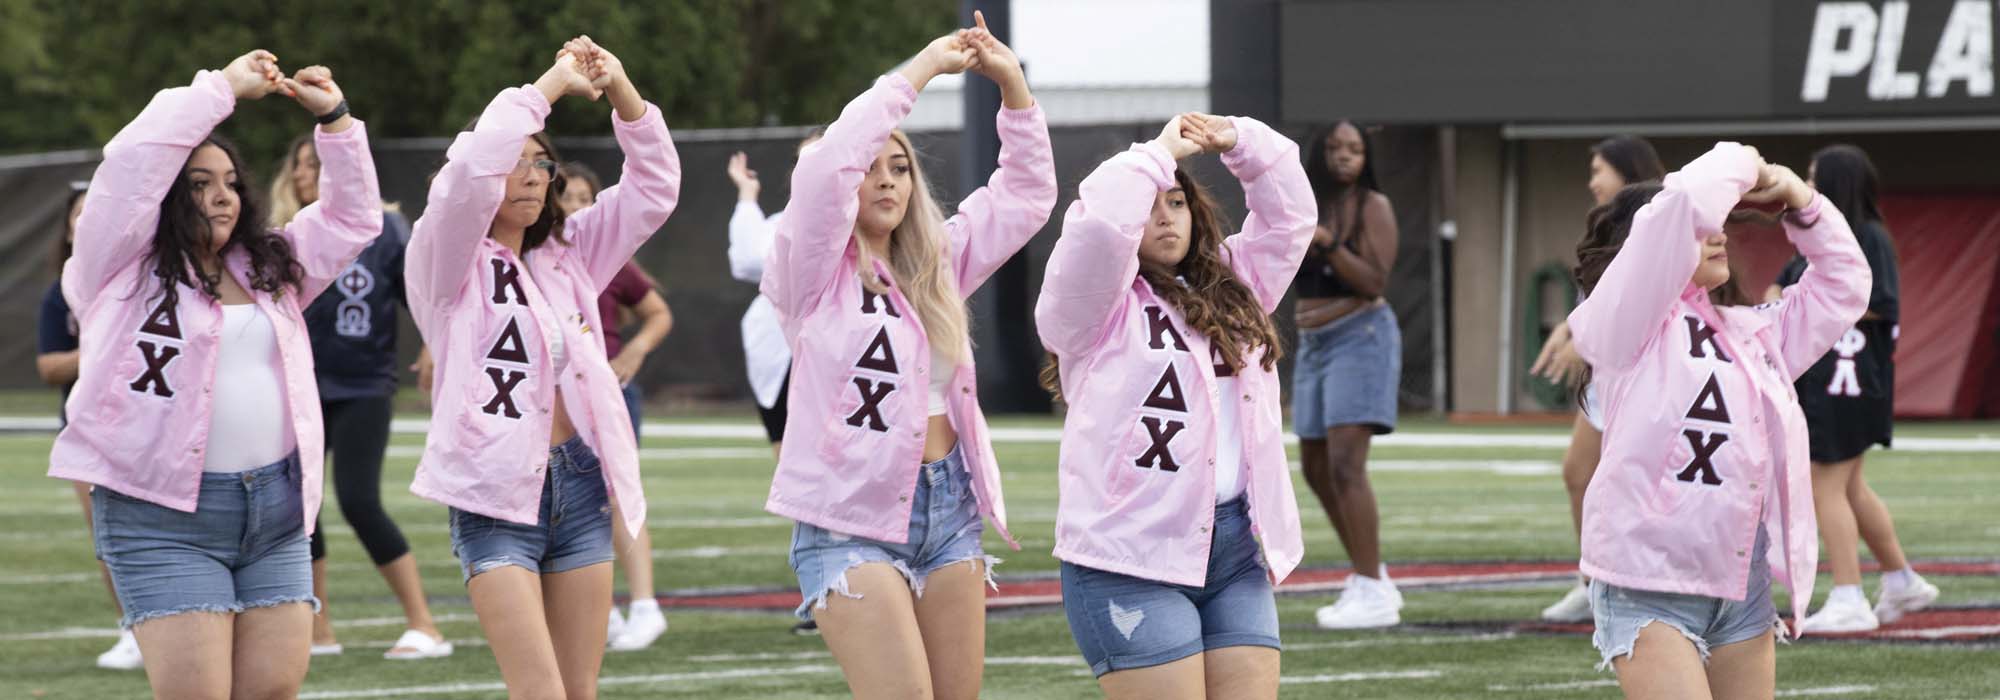 Members of Kappa Delta Chi perform at Huskie Stadium wearing matching pink jackets and denim shorts